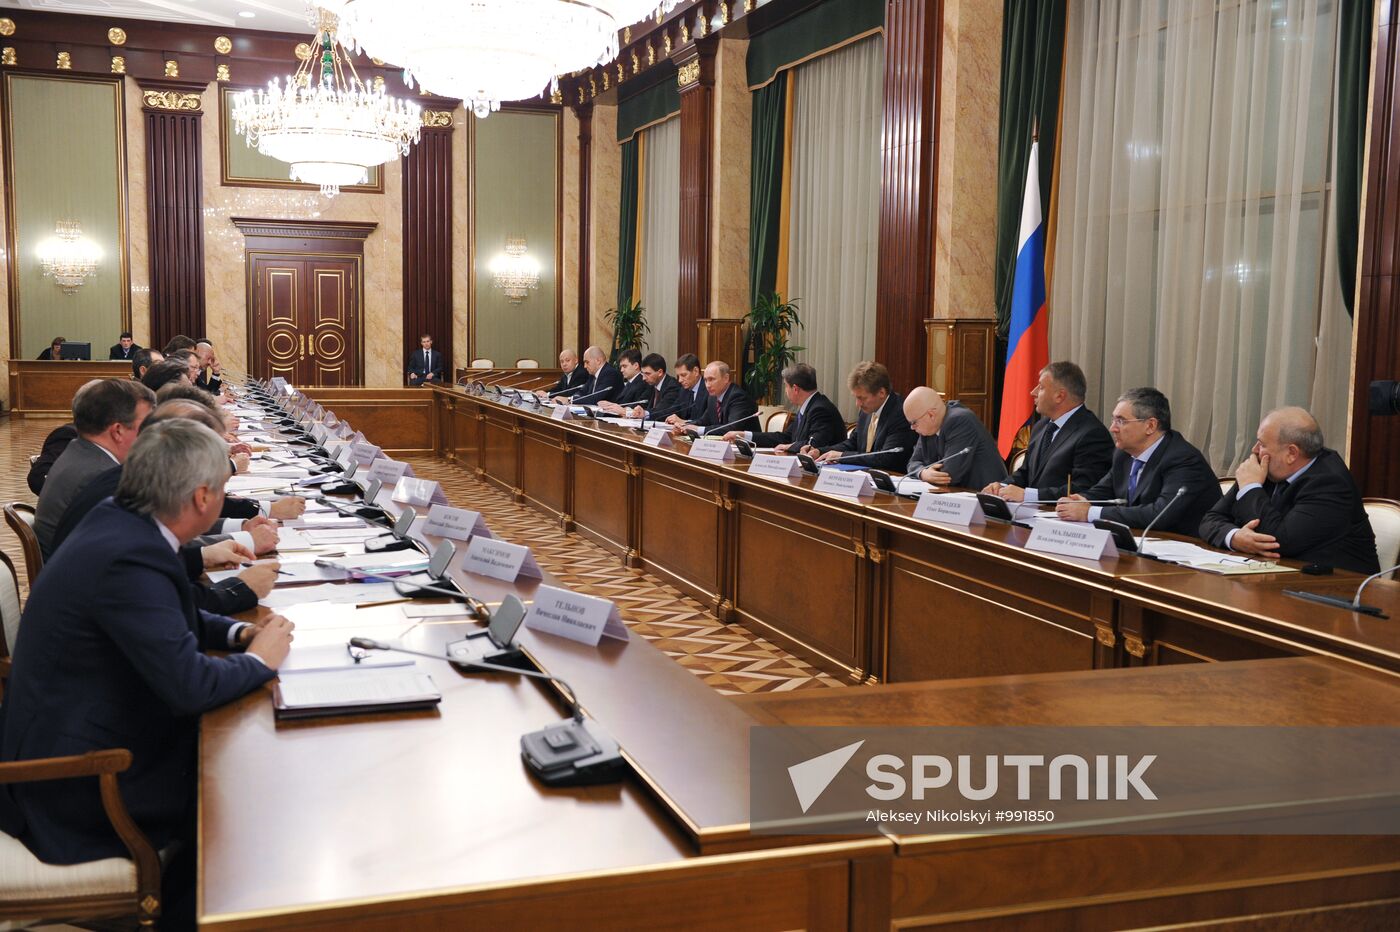 Vladimir Putin holds Government Council meeting